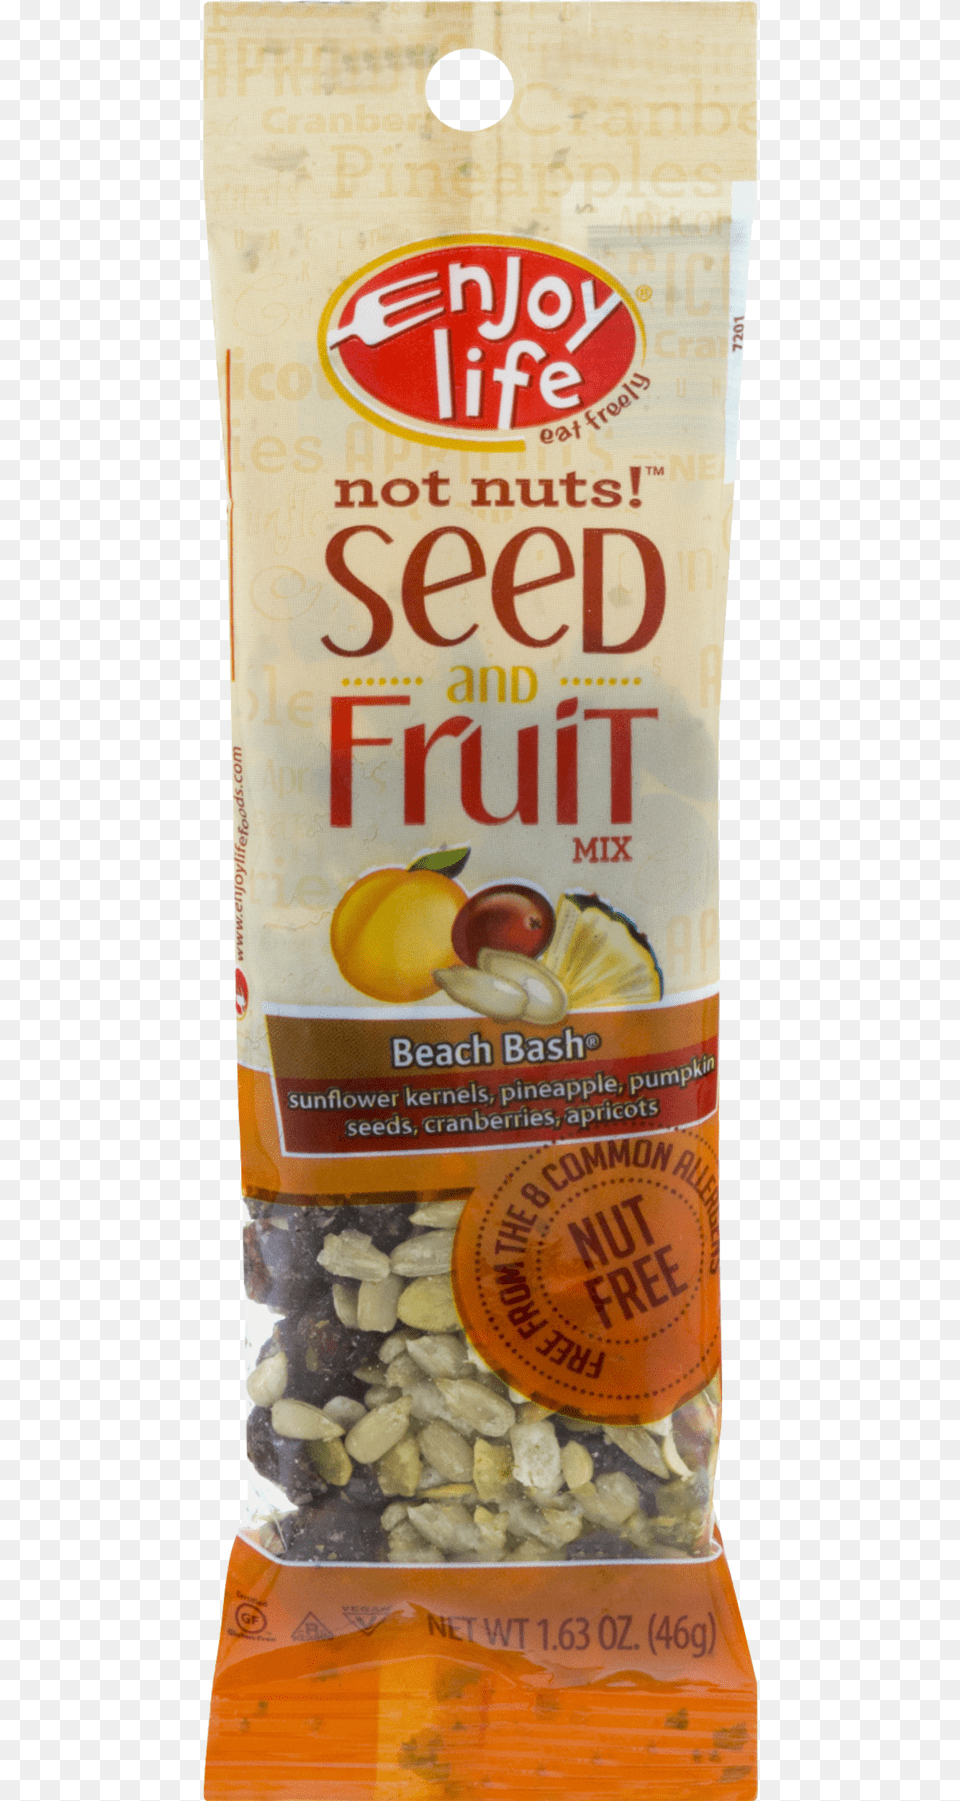 Enjoy Life Not Nuts Beach Bash Seed Amp Fruit Mix Orange, Alcohol, Beer, Beverage, Food Png Image